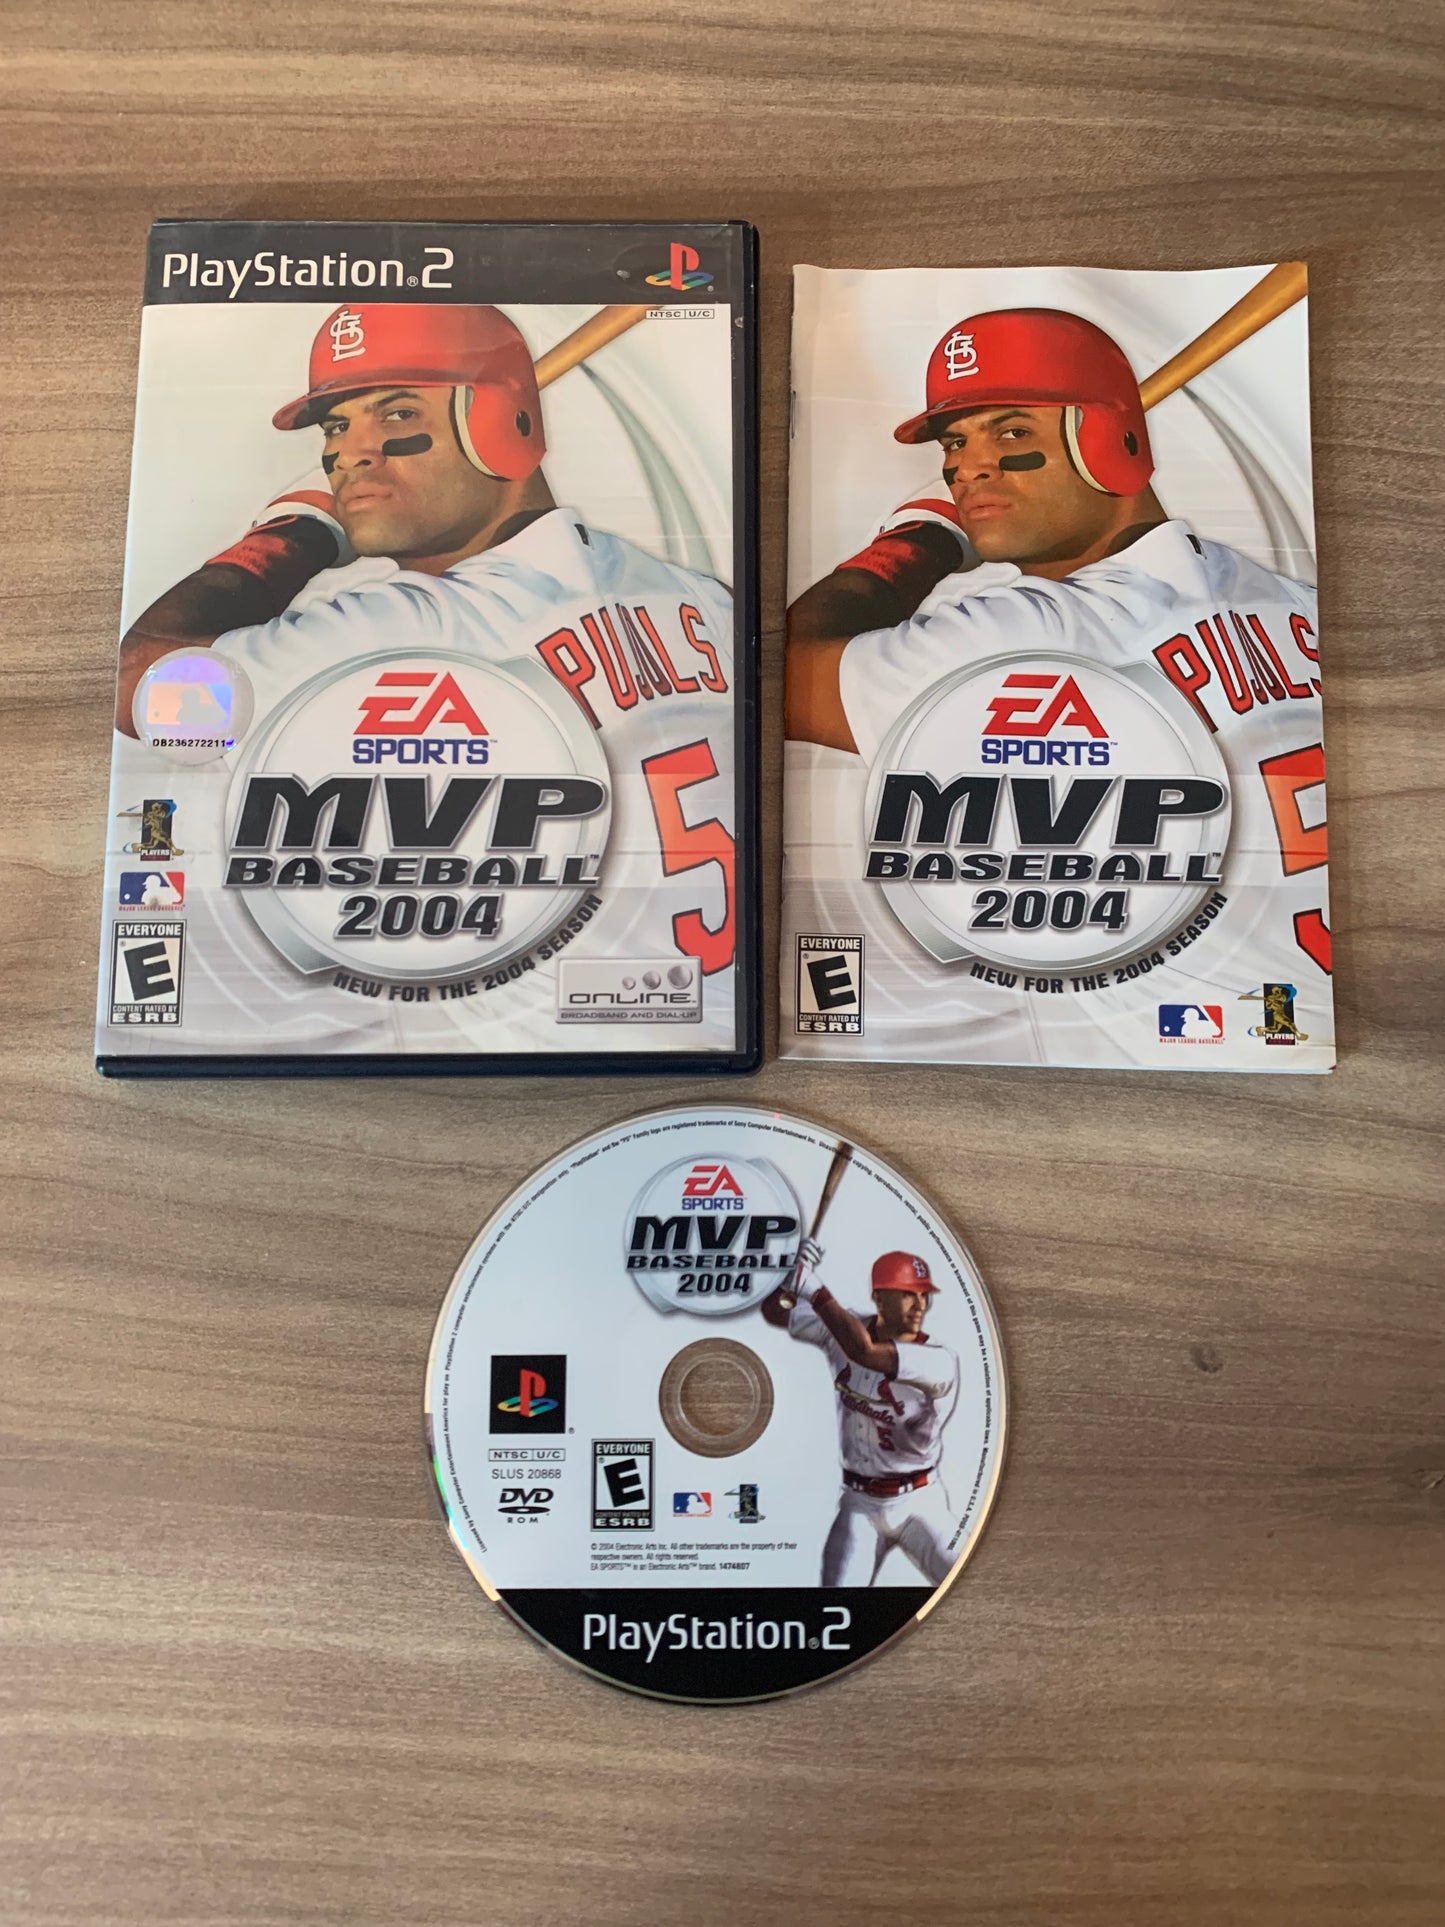 PiXEL-RETRO.COM : SONY PLAYSTATION 2 (PS2) COMPLET CIB BOX MANUAL GAME NTSC MVP BASEBALL 2004